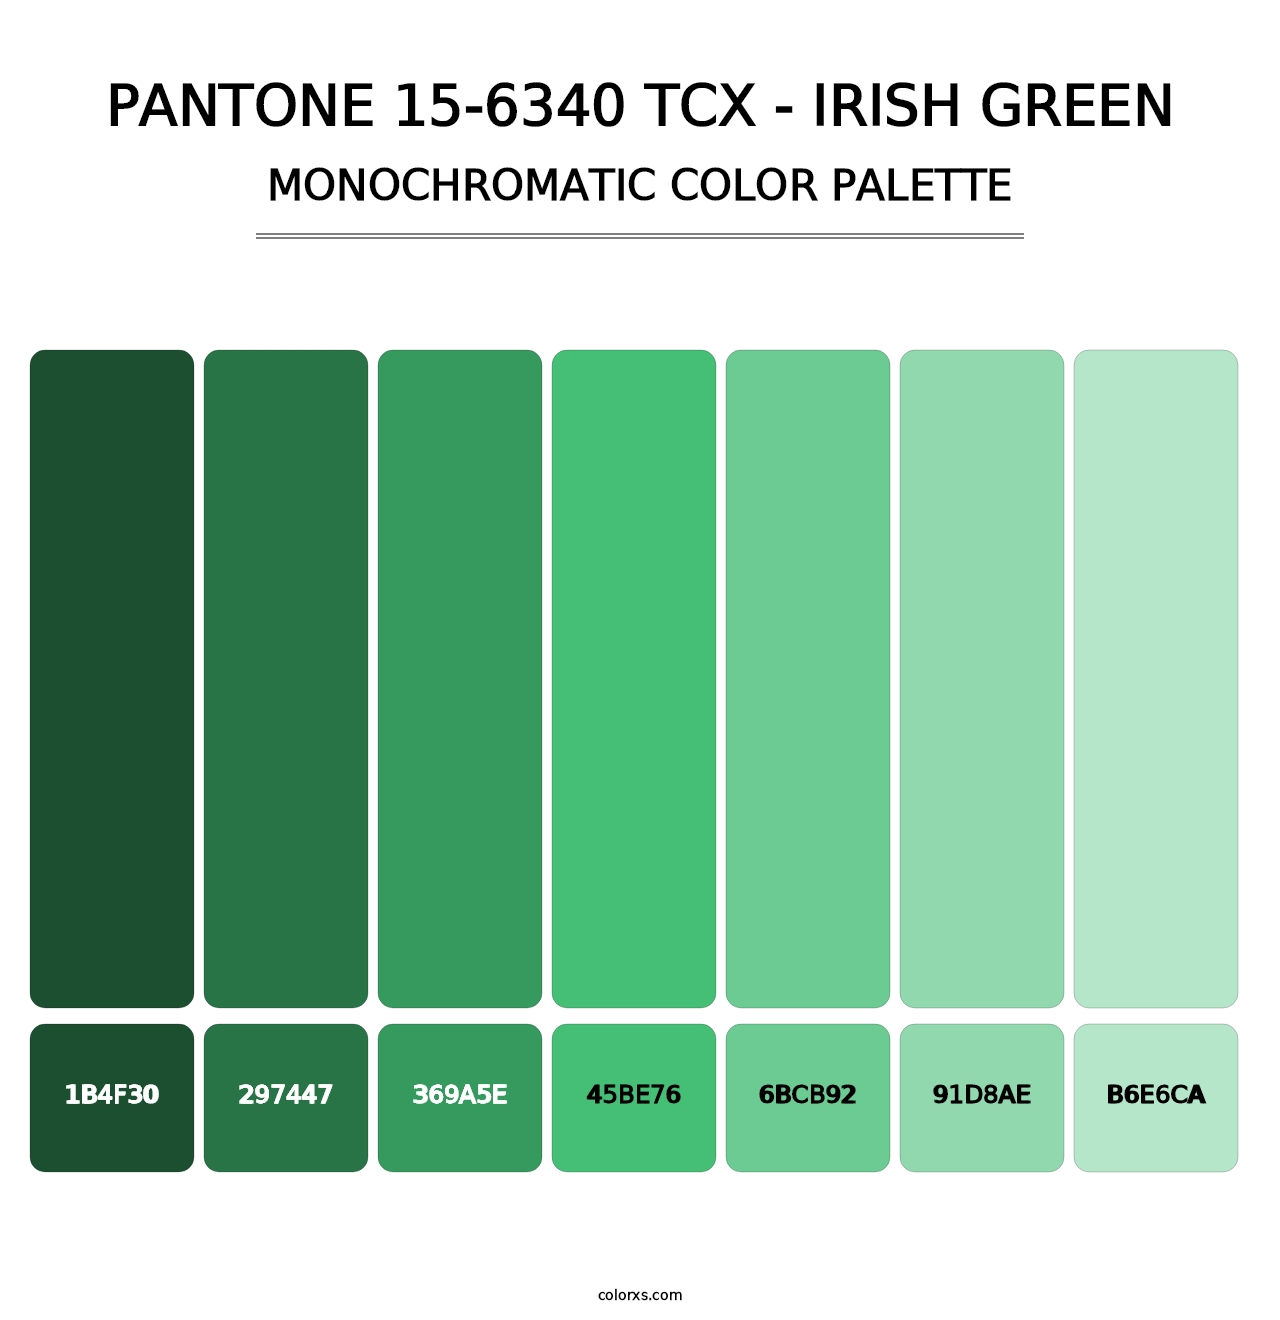 PANTONE 15-6340 TCX - Irish Green - Monochromatic Color Palette